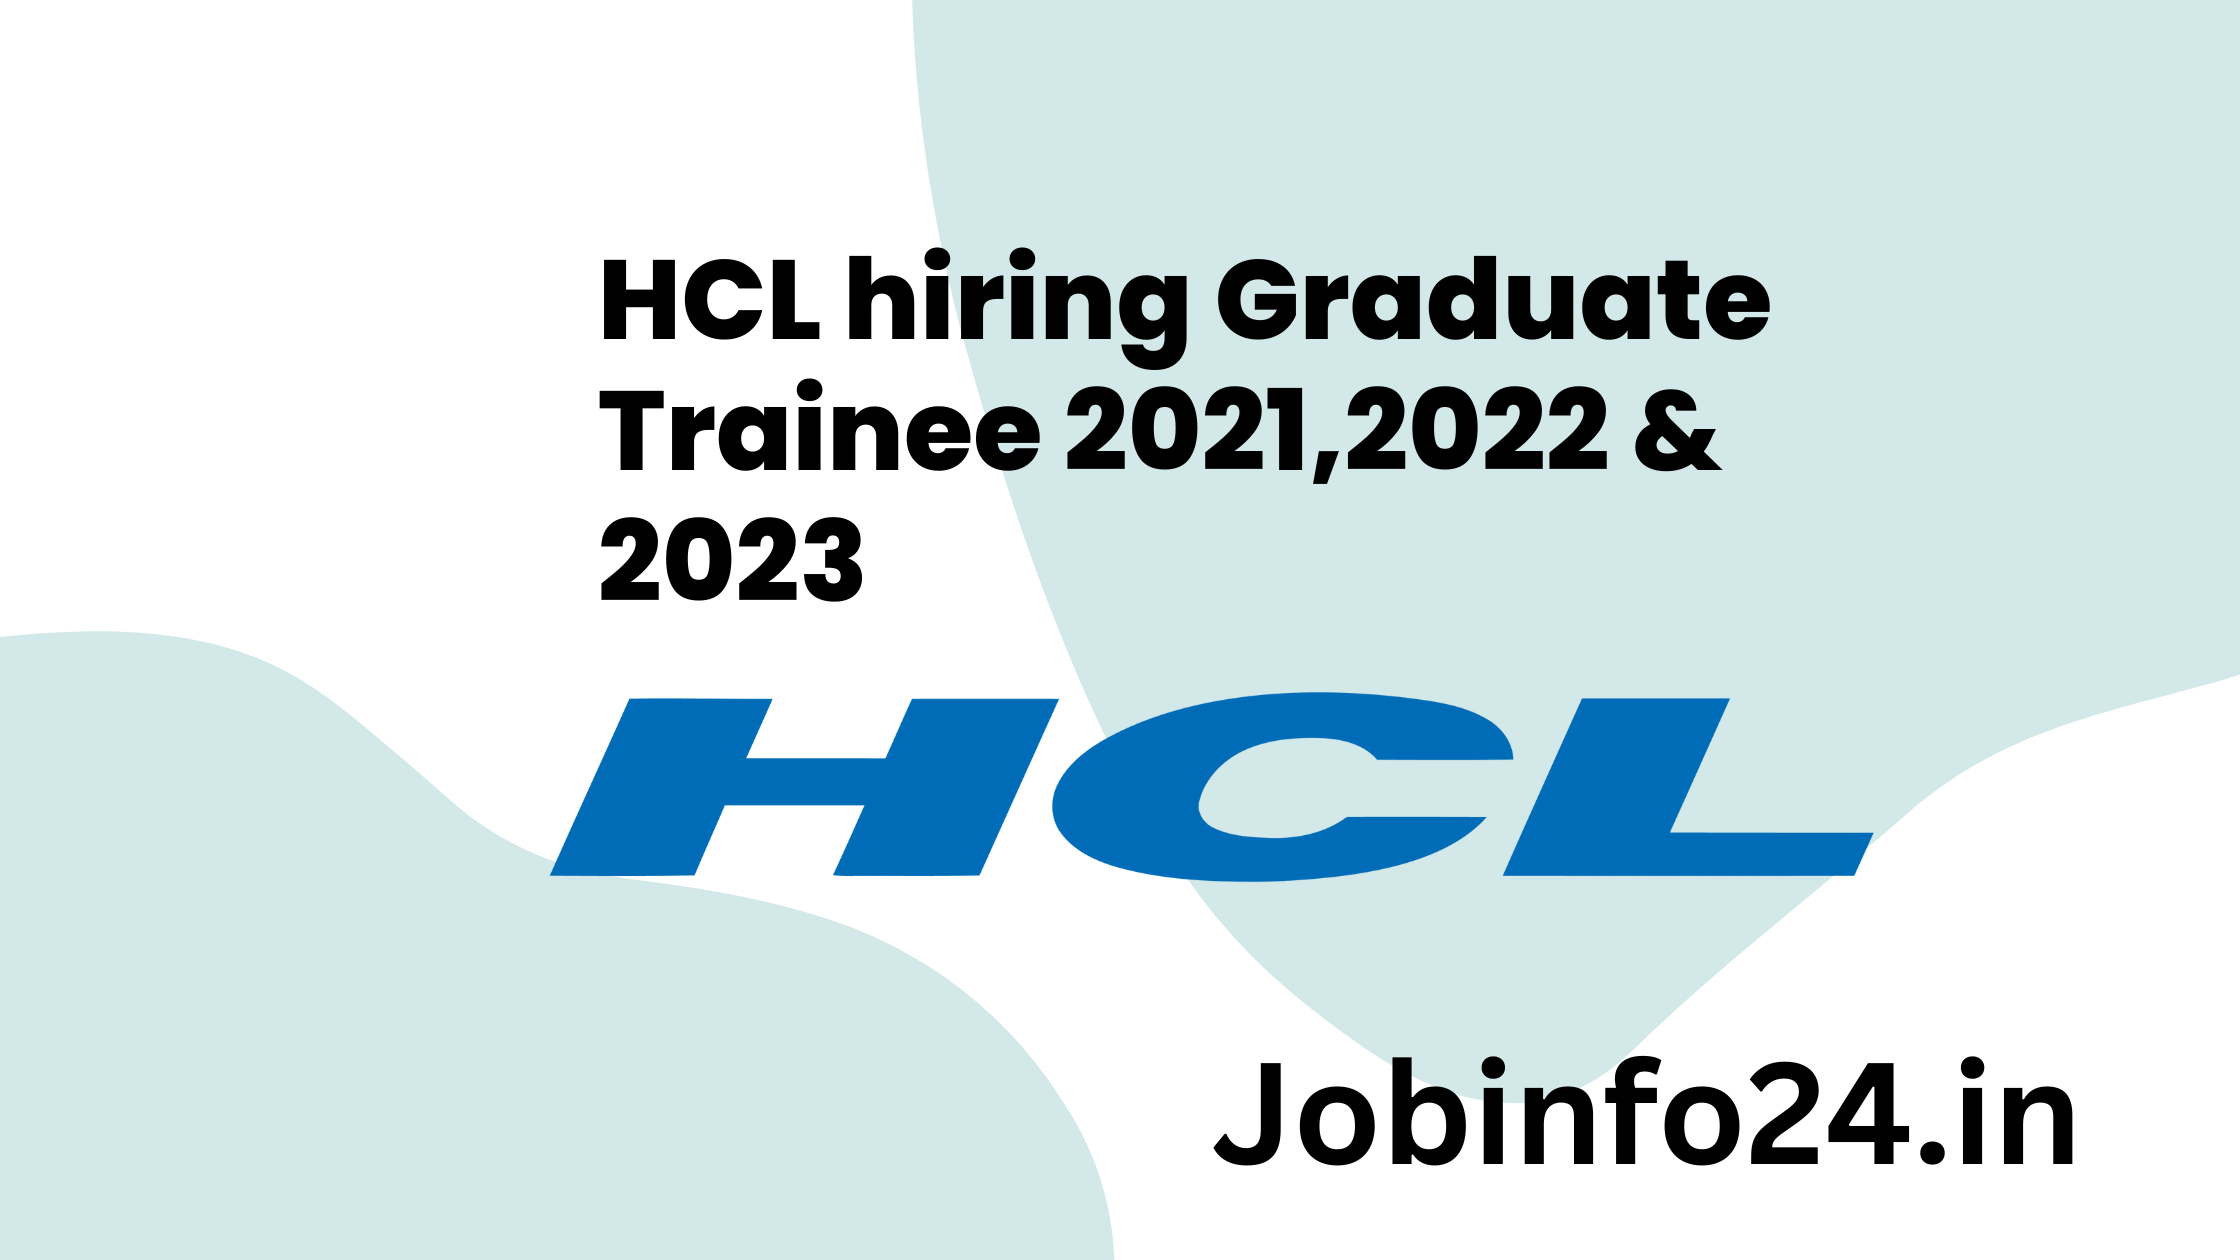 HCL hiring Graduate Trainee 2021,2022 & 2023